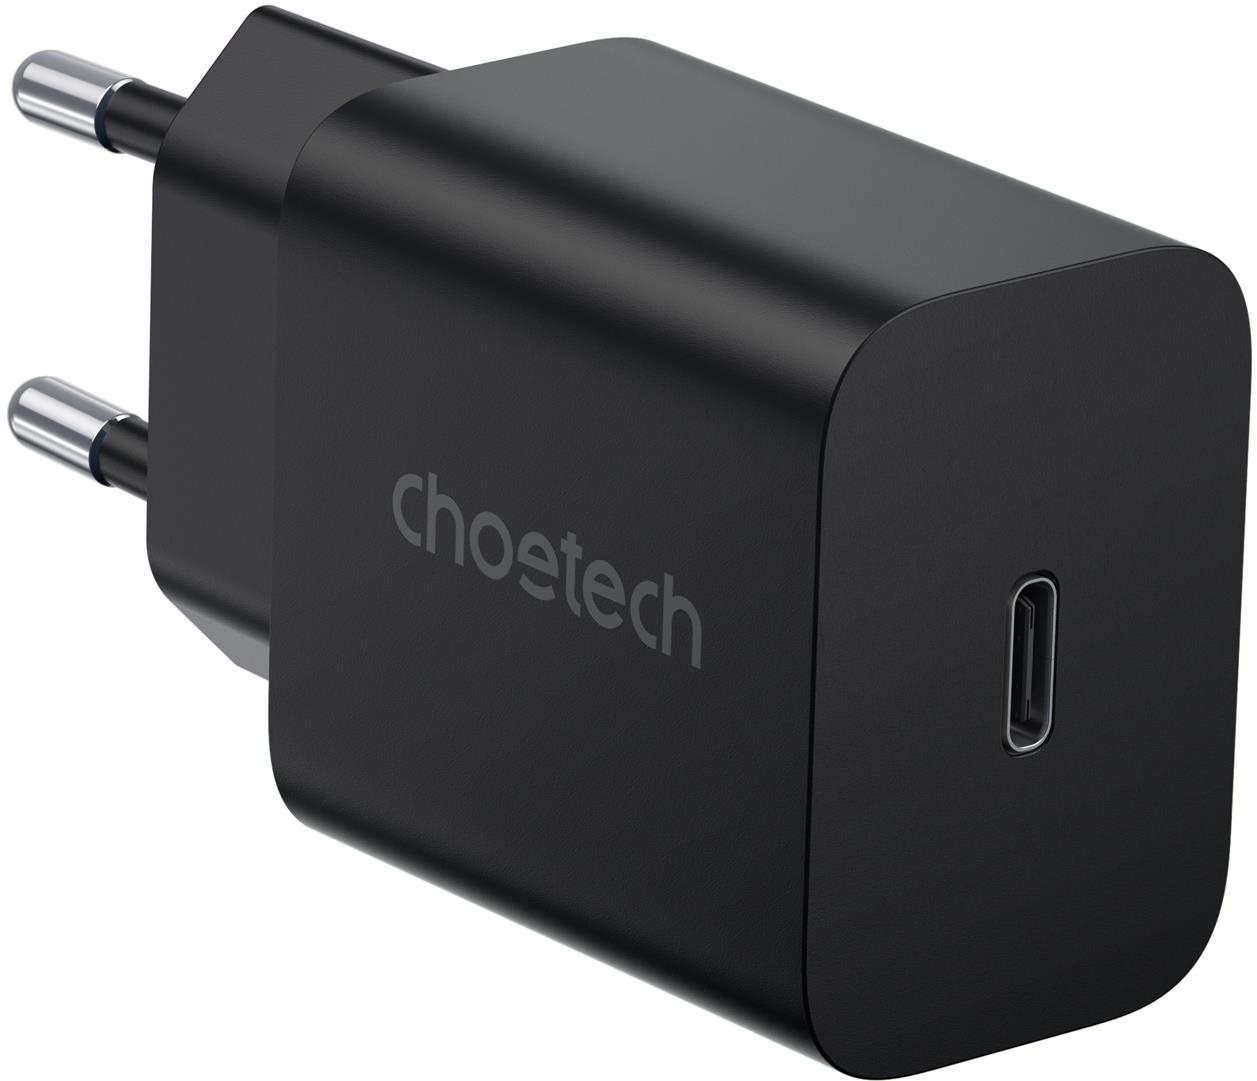 ChoeTech USB-C PD 20W Wall Charger Black